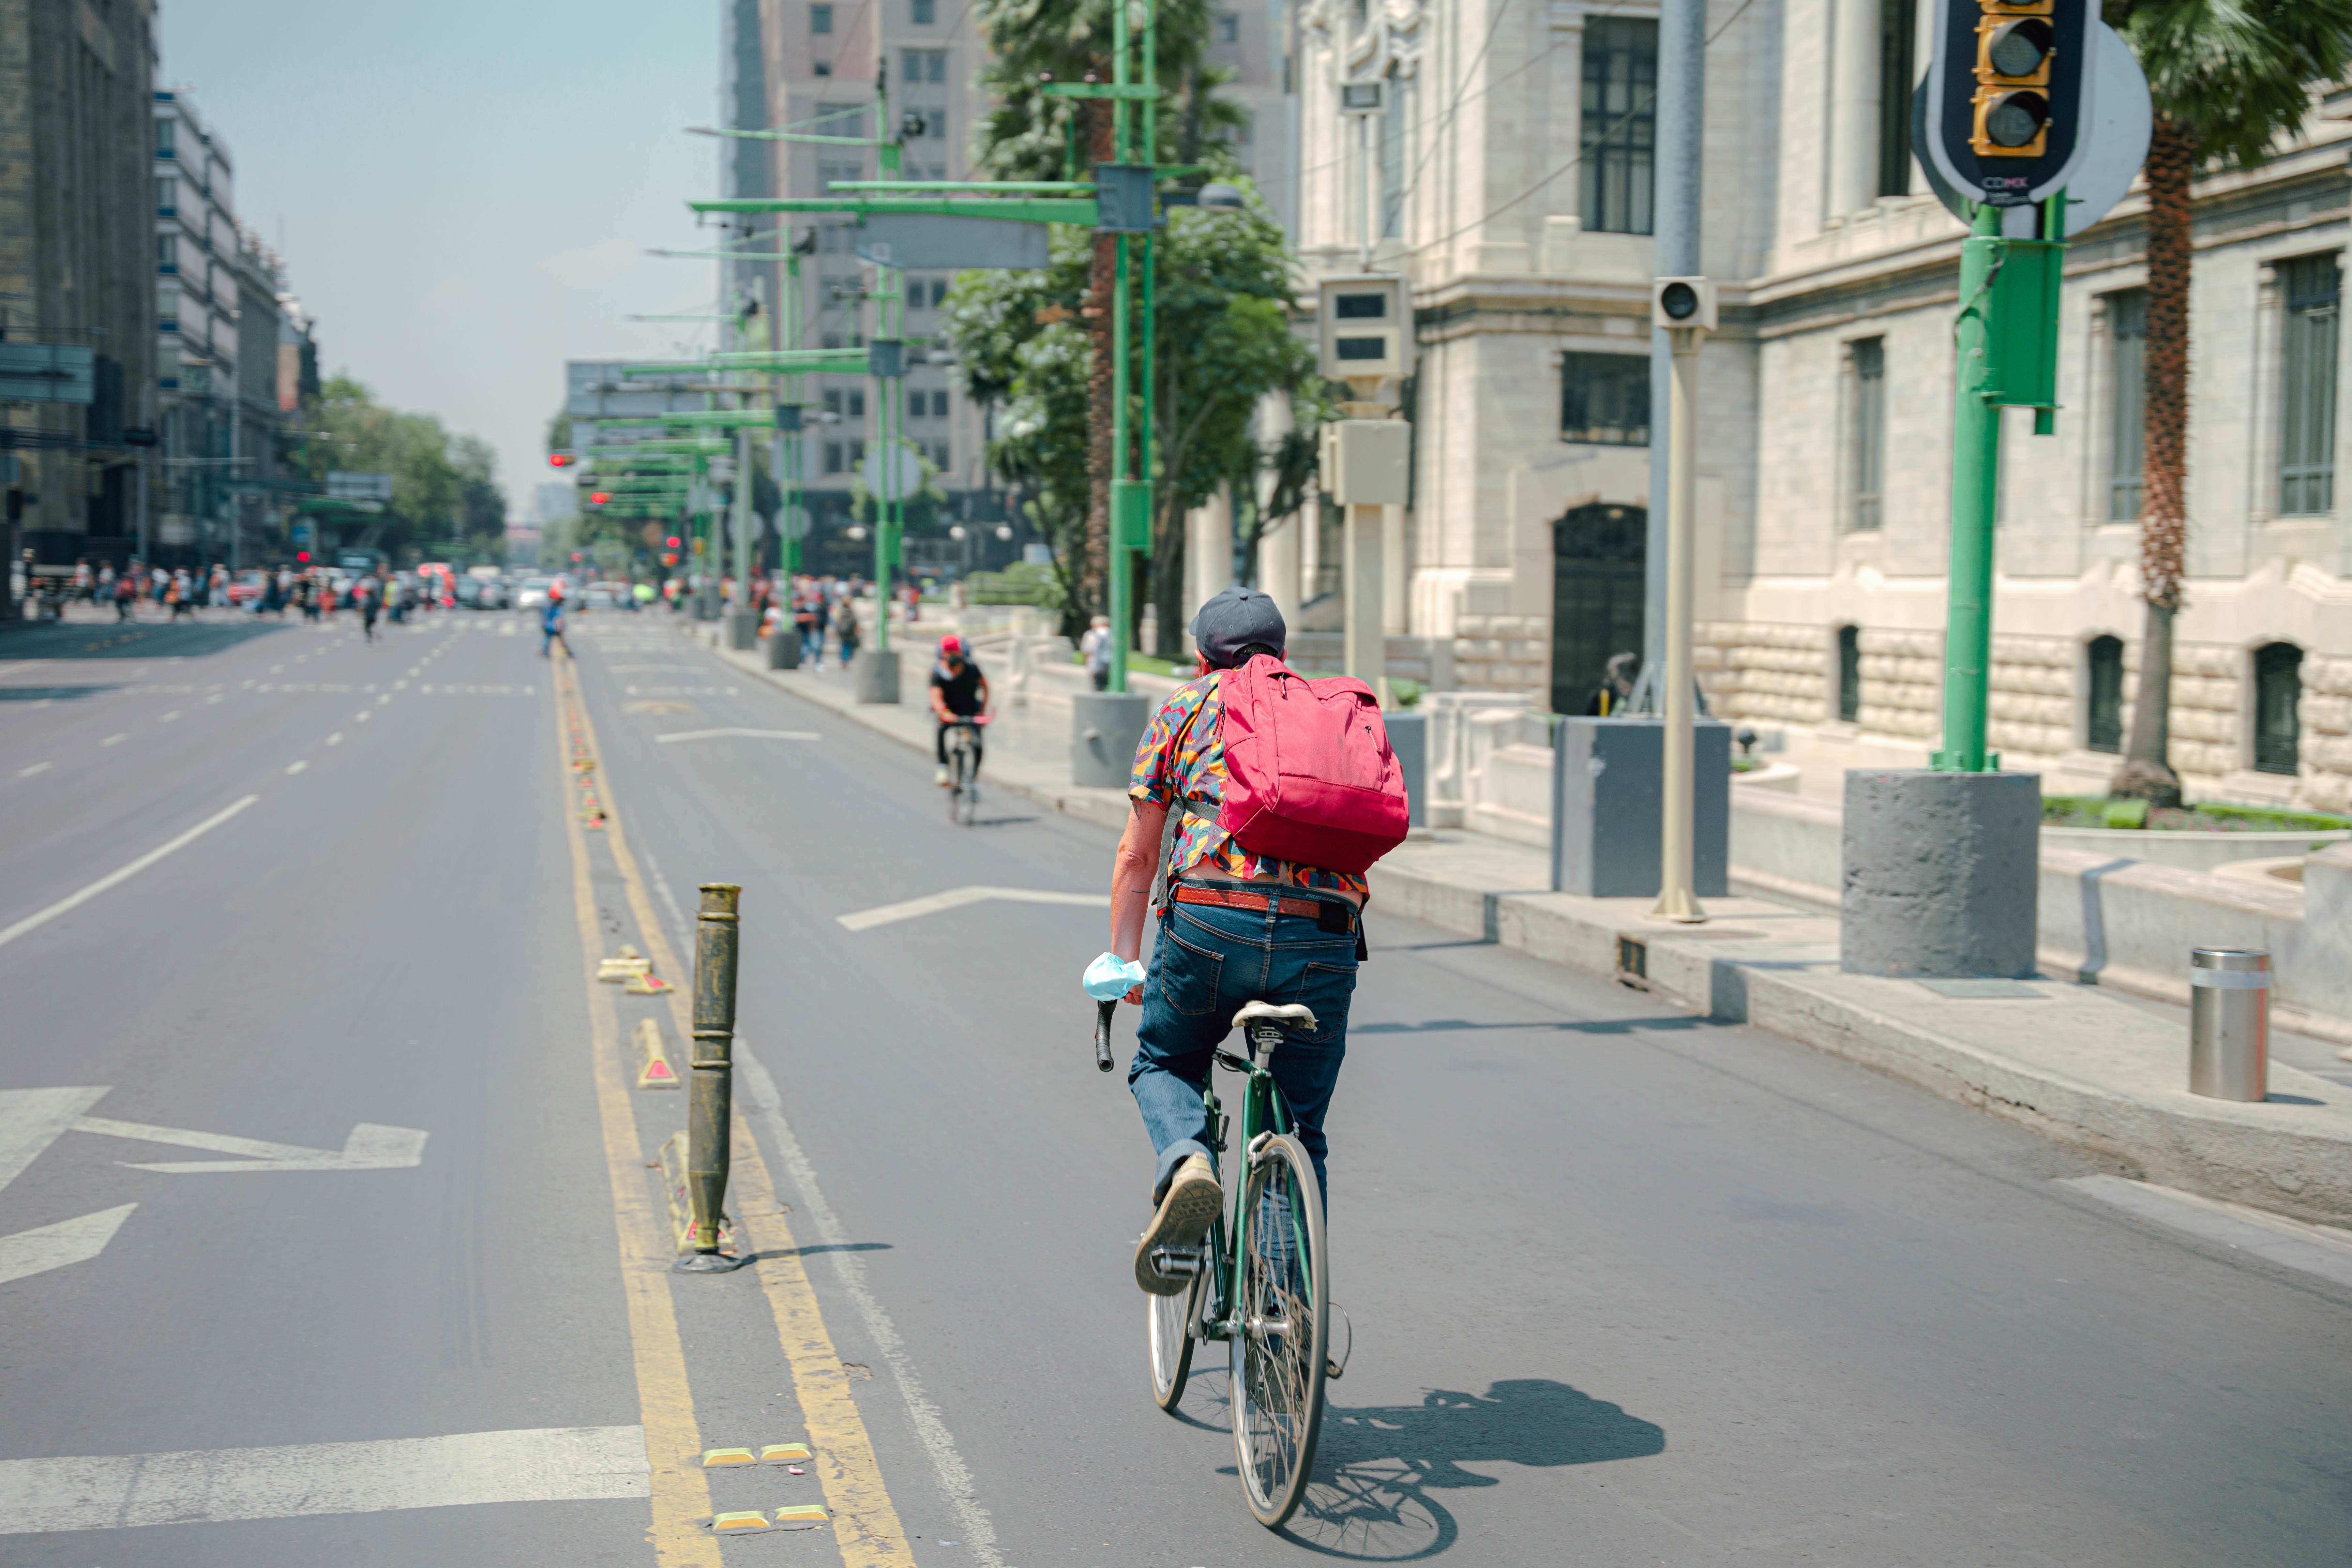 Gratis Fotos de stock gratuitas de bici, bicicleta, calle Foto de stock